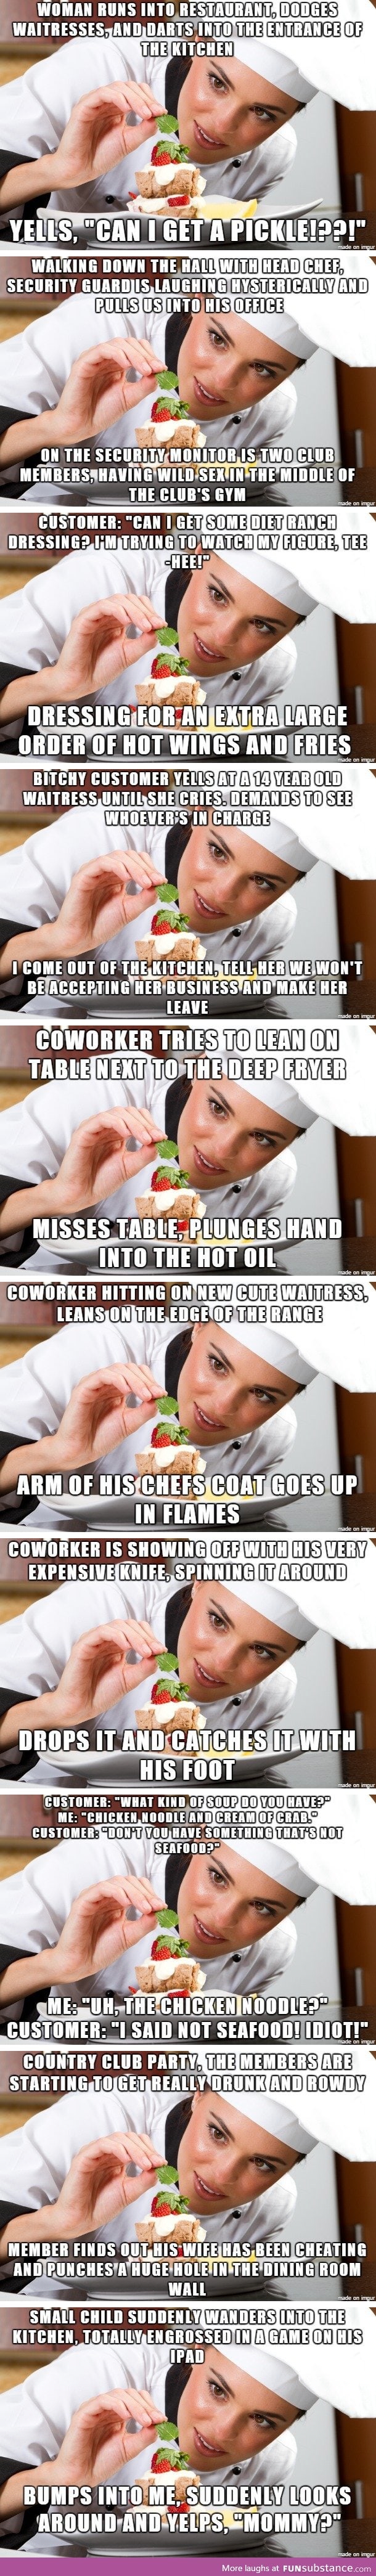 Chef job stories